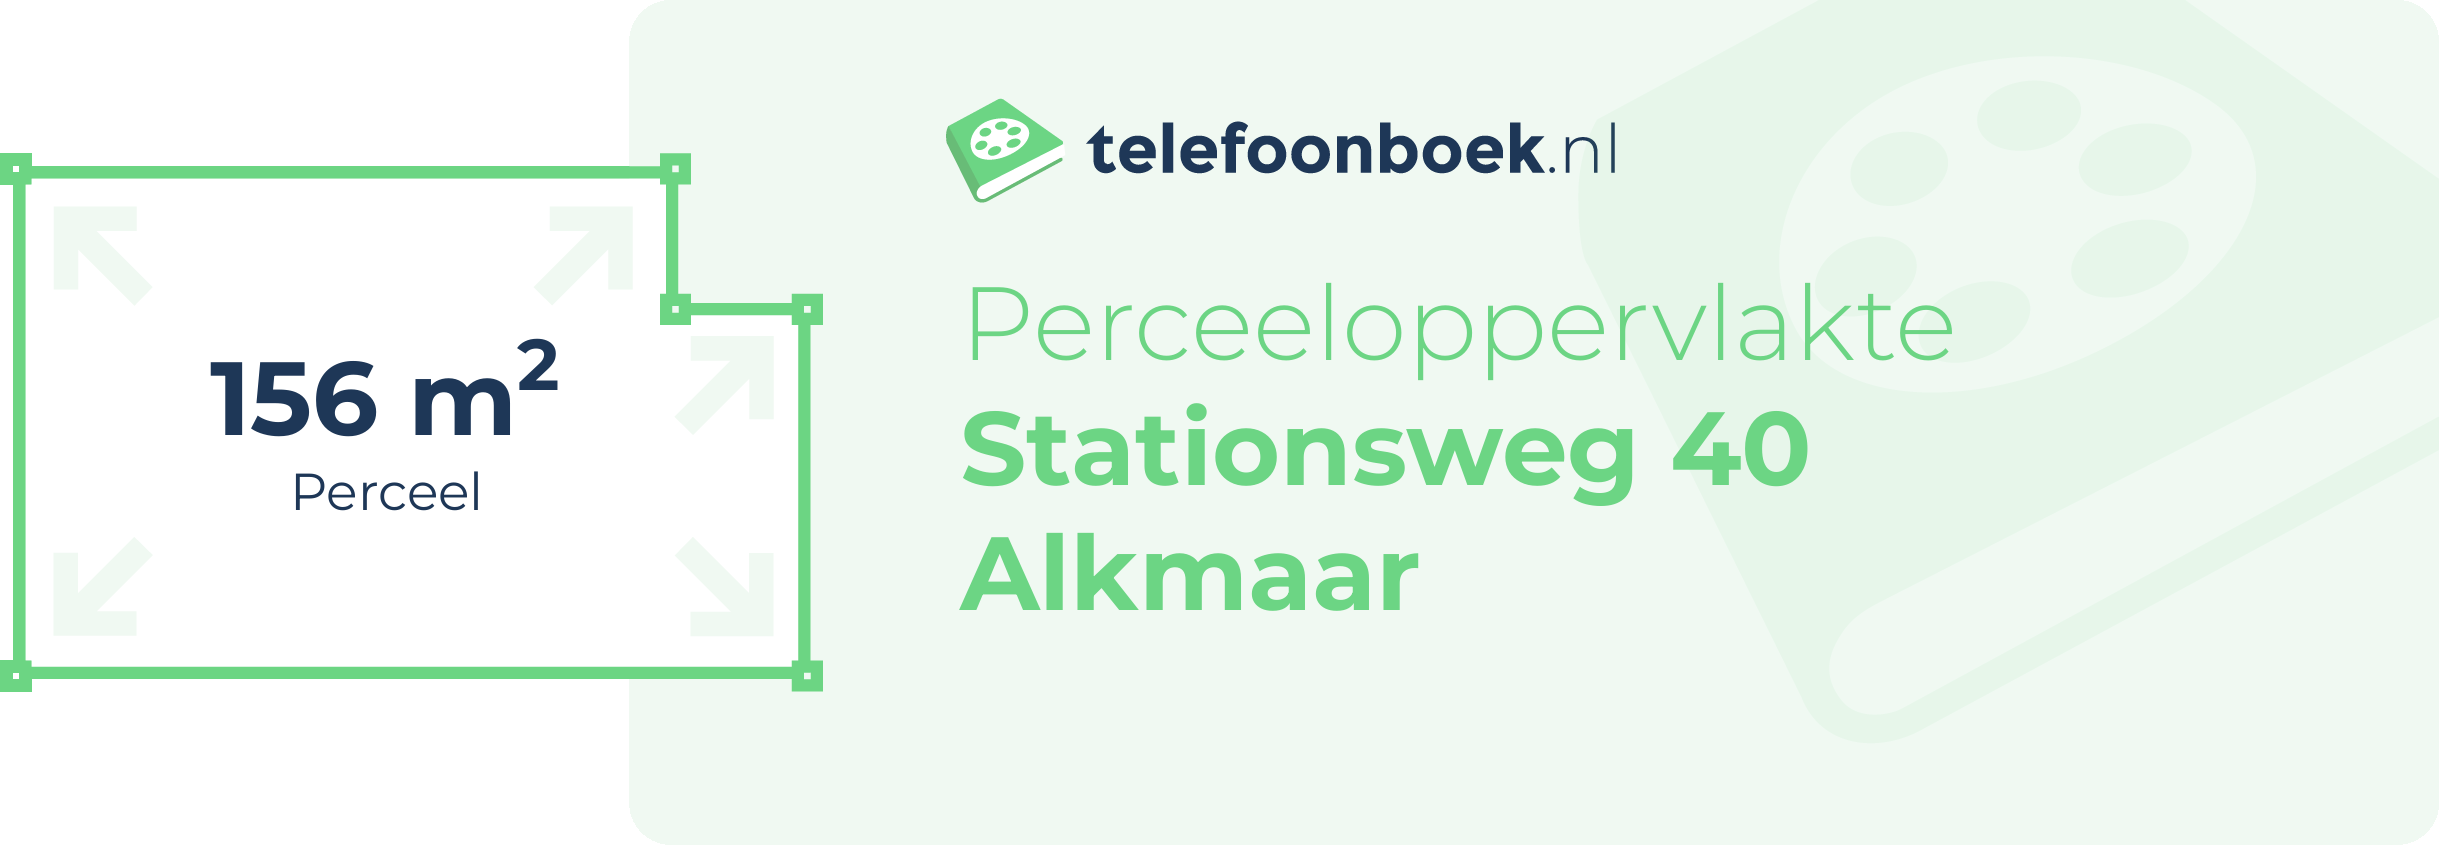 Perceeloppervlakte Stationsweg 40 Alkmaar